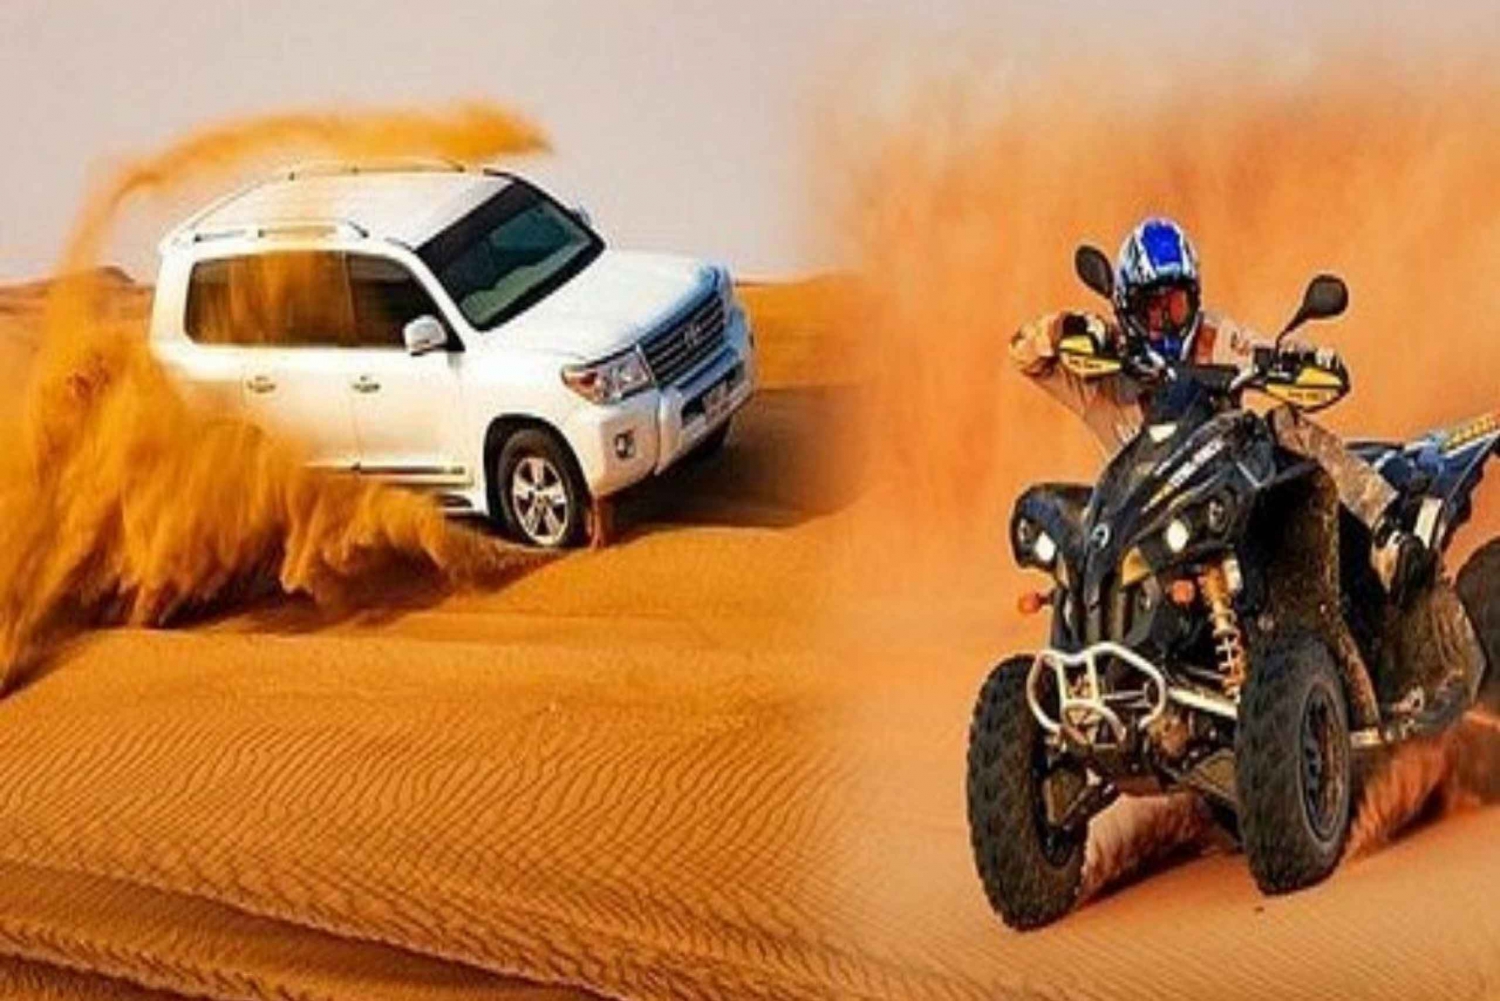 Dubai: Safáris no Deserto, Sandboard, Passeio de Camelo, Jantar e Shows